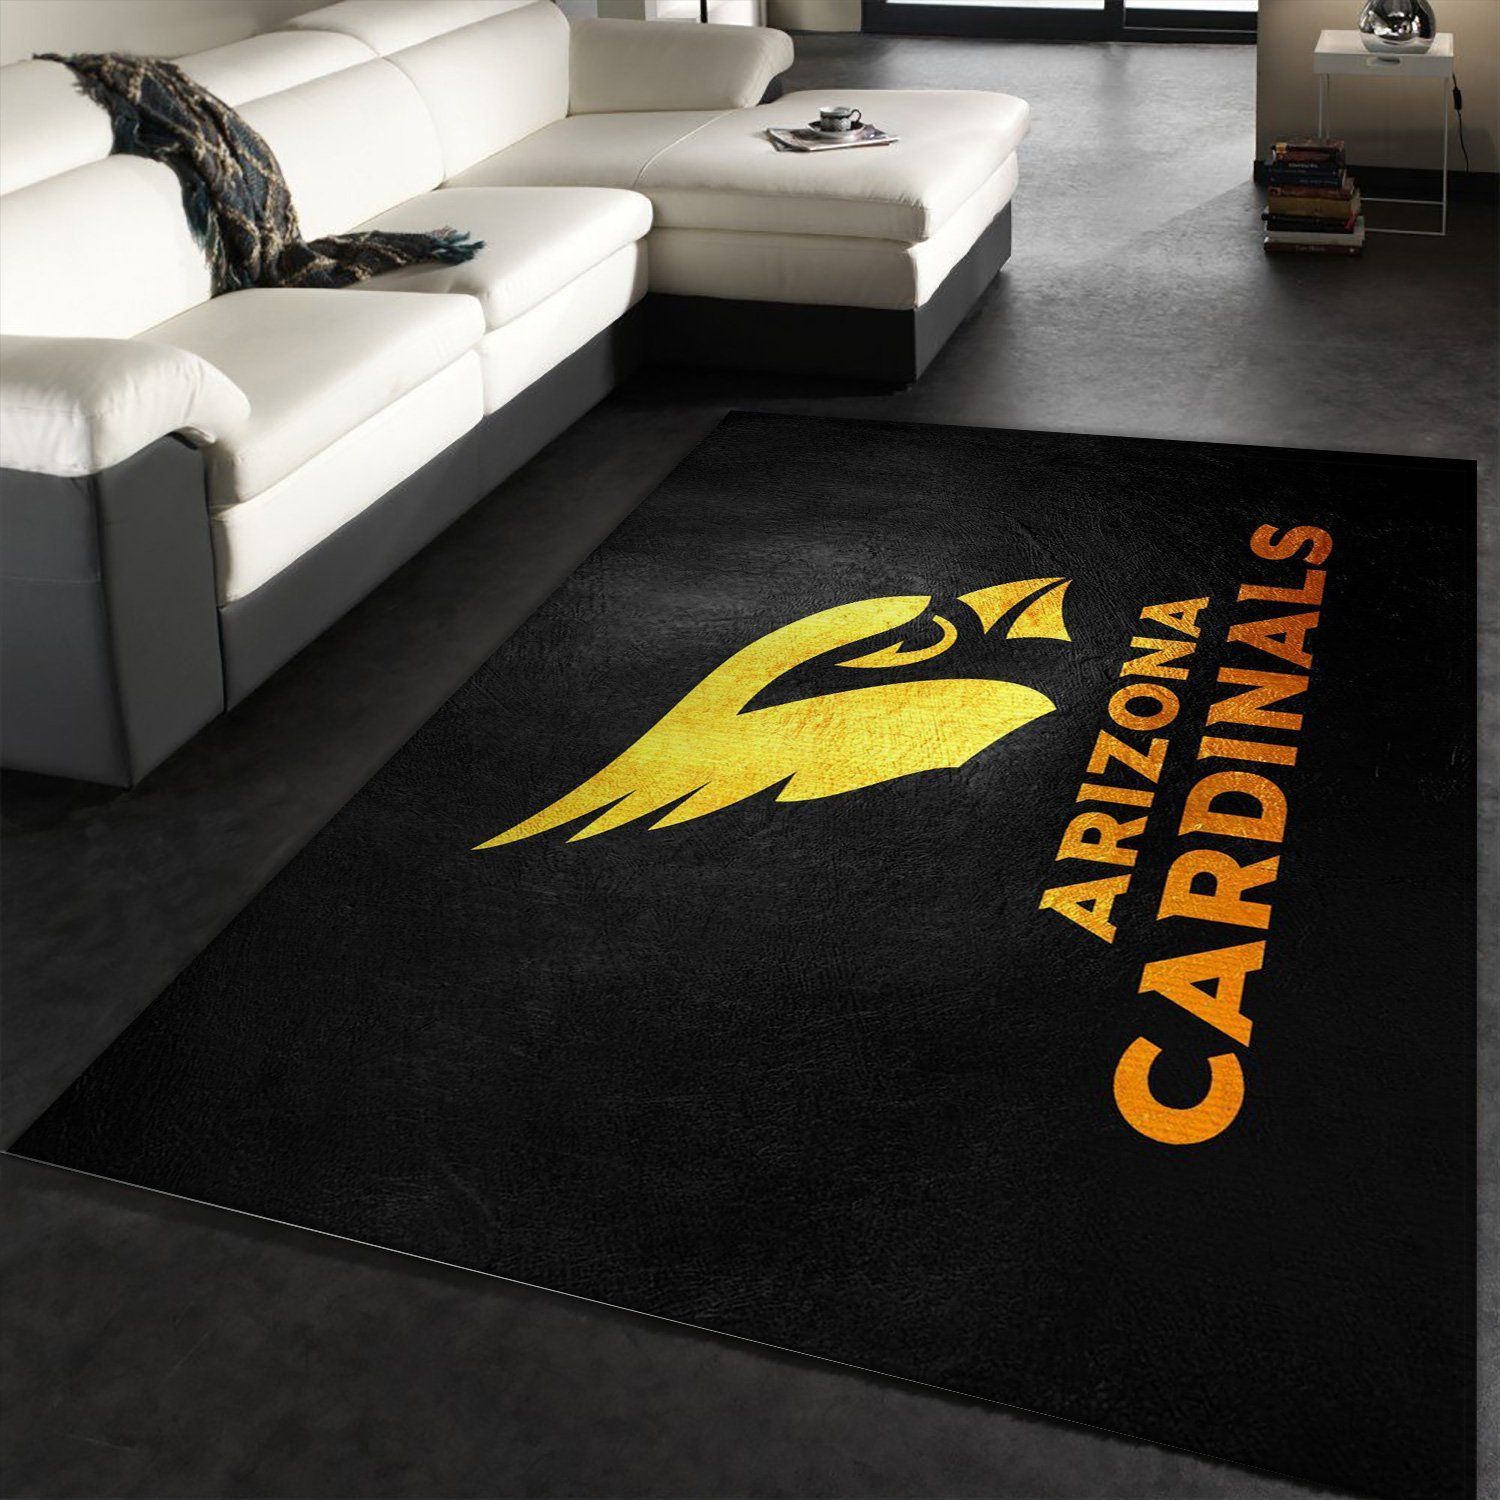 Arizona Cardinals NFL Team Logos Area Rug, Living room and bedroom Rug, US Gift Decor – Indoor Outdoor Rugs